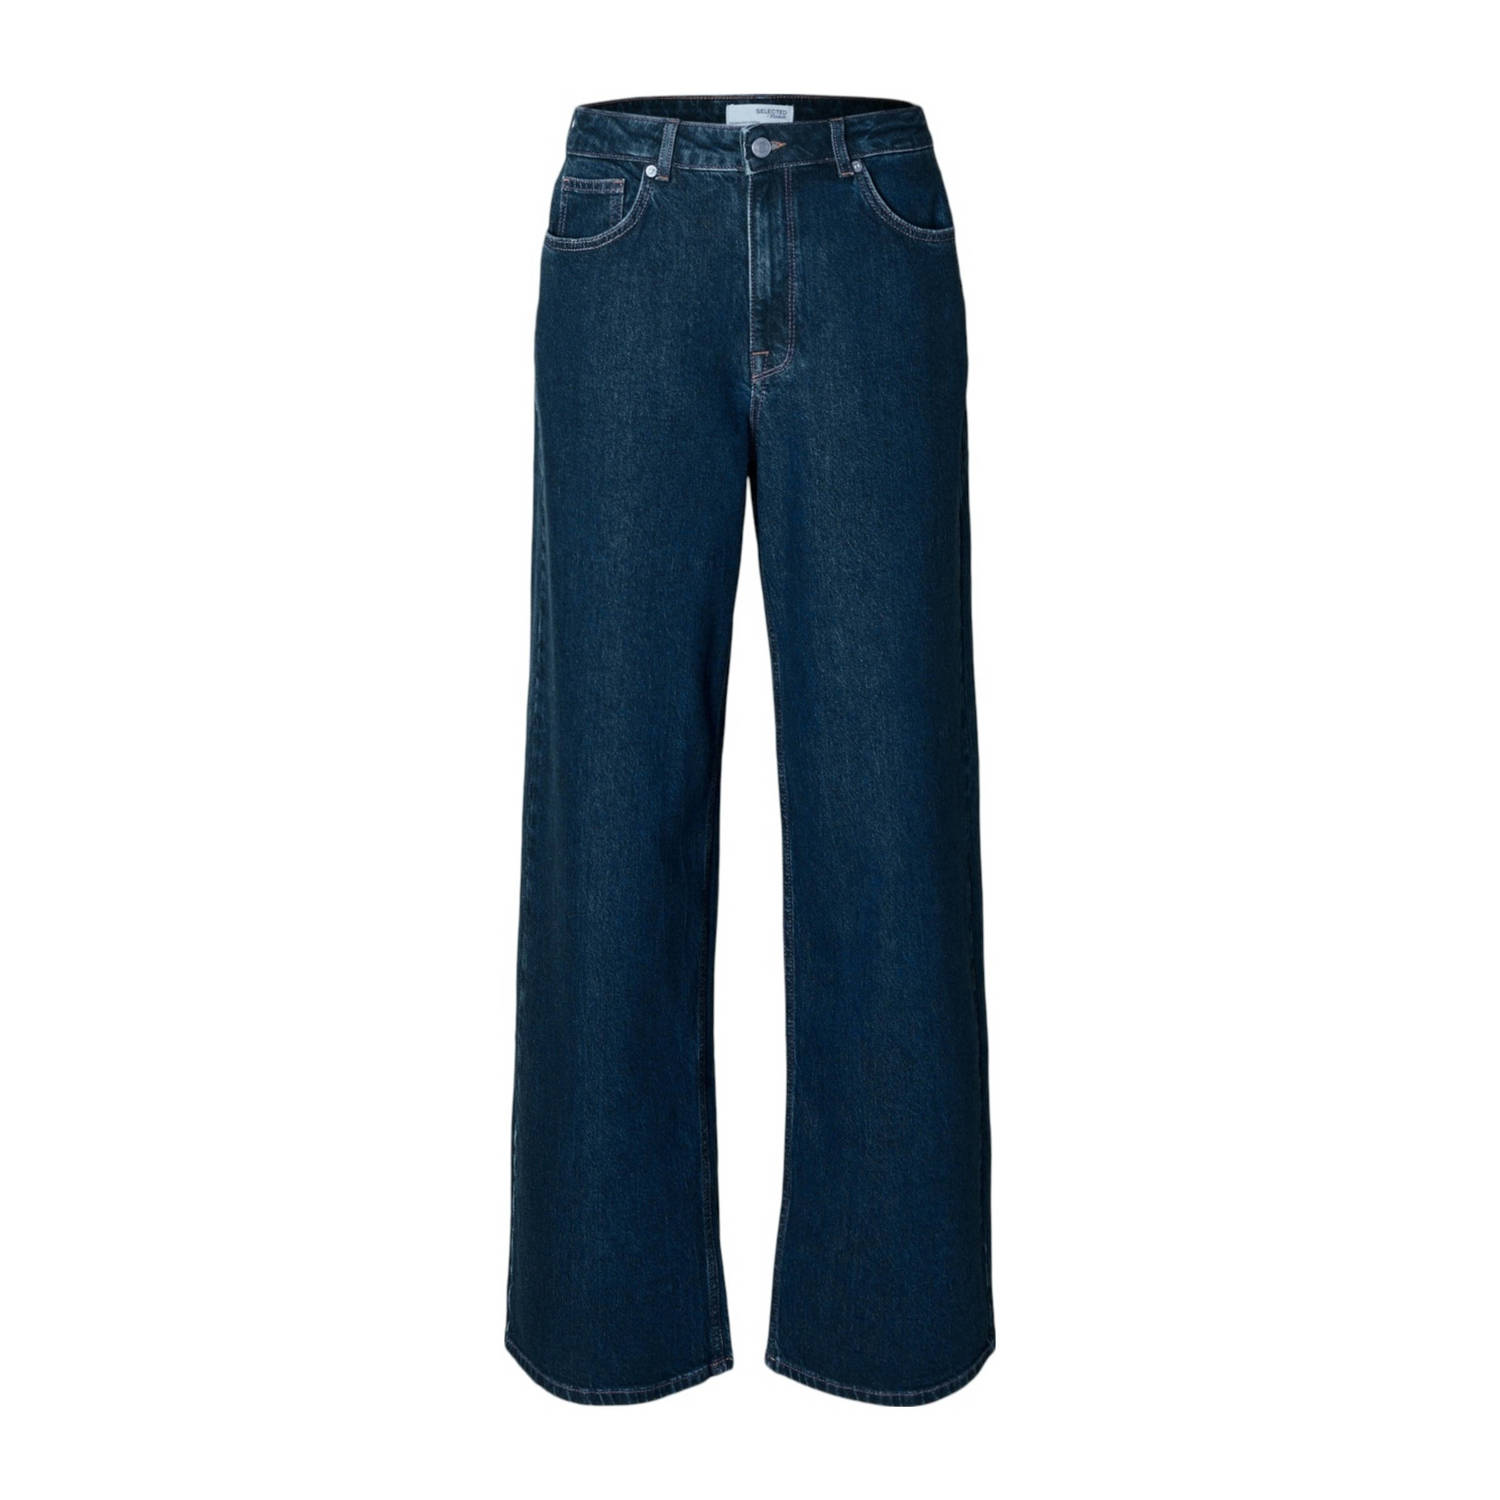 SELECTED FEMME low waist wide leg jeans dark blue denim